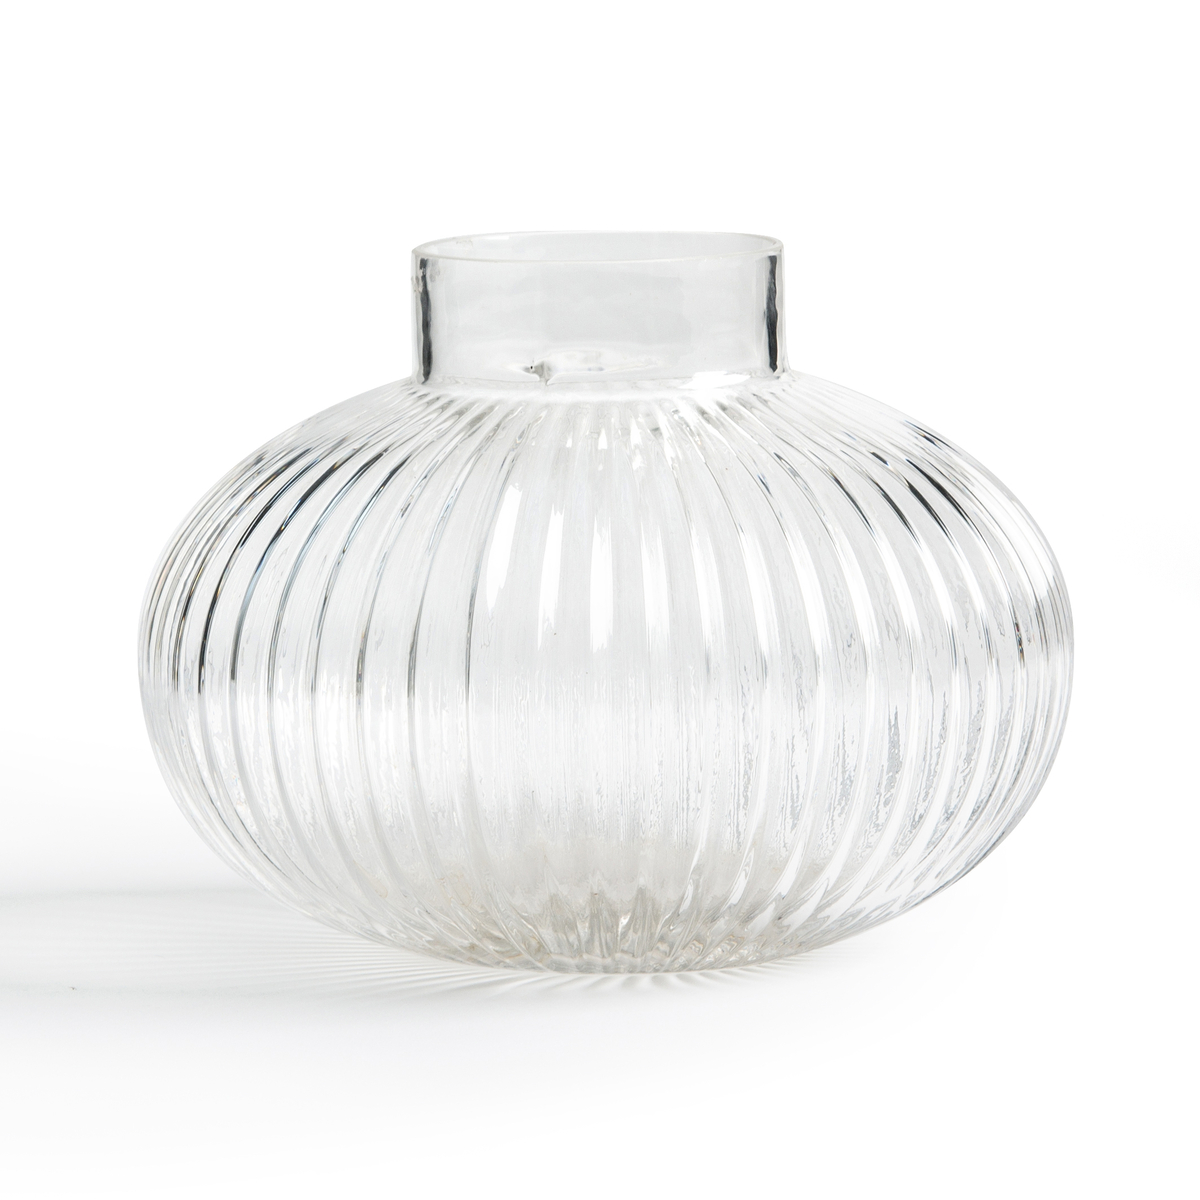 Afa 15cm High Round Striated Glass Vase